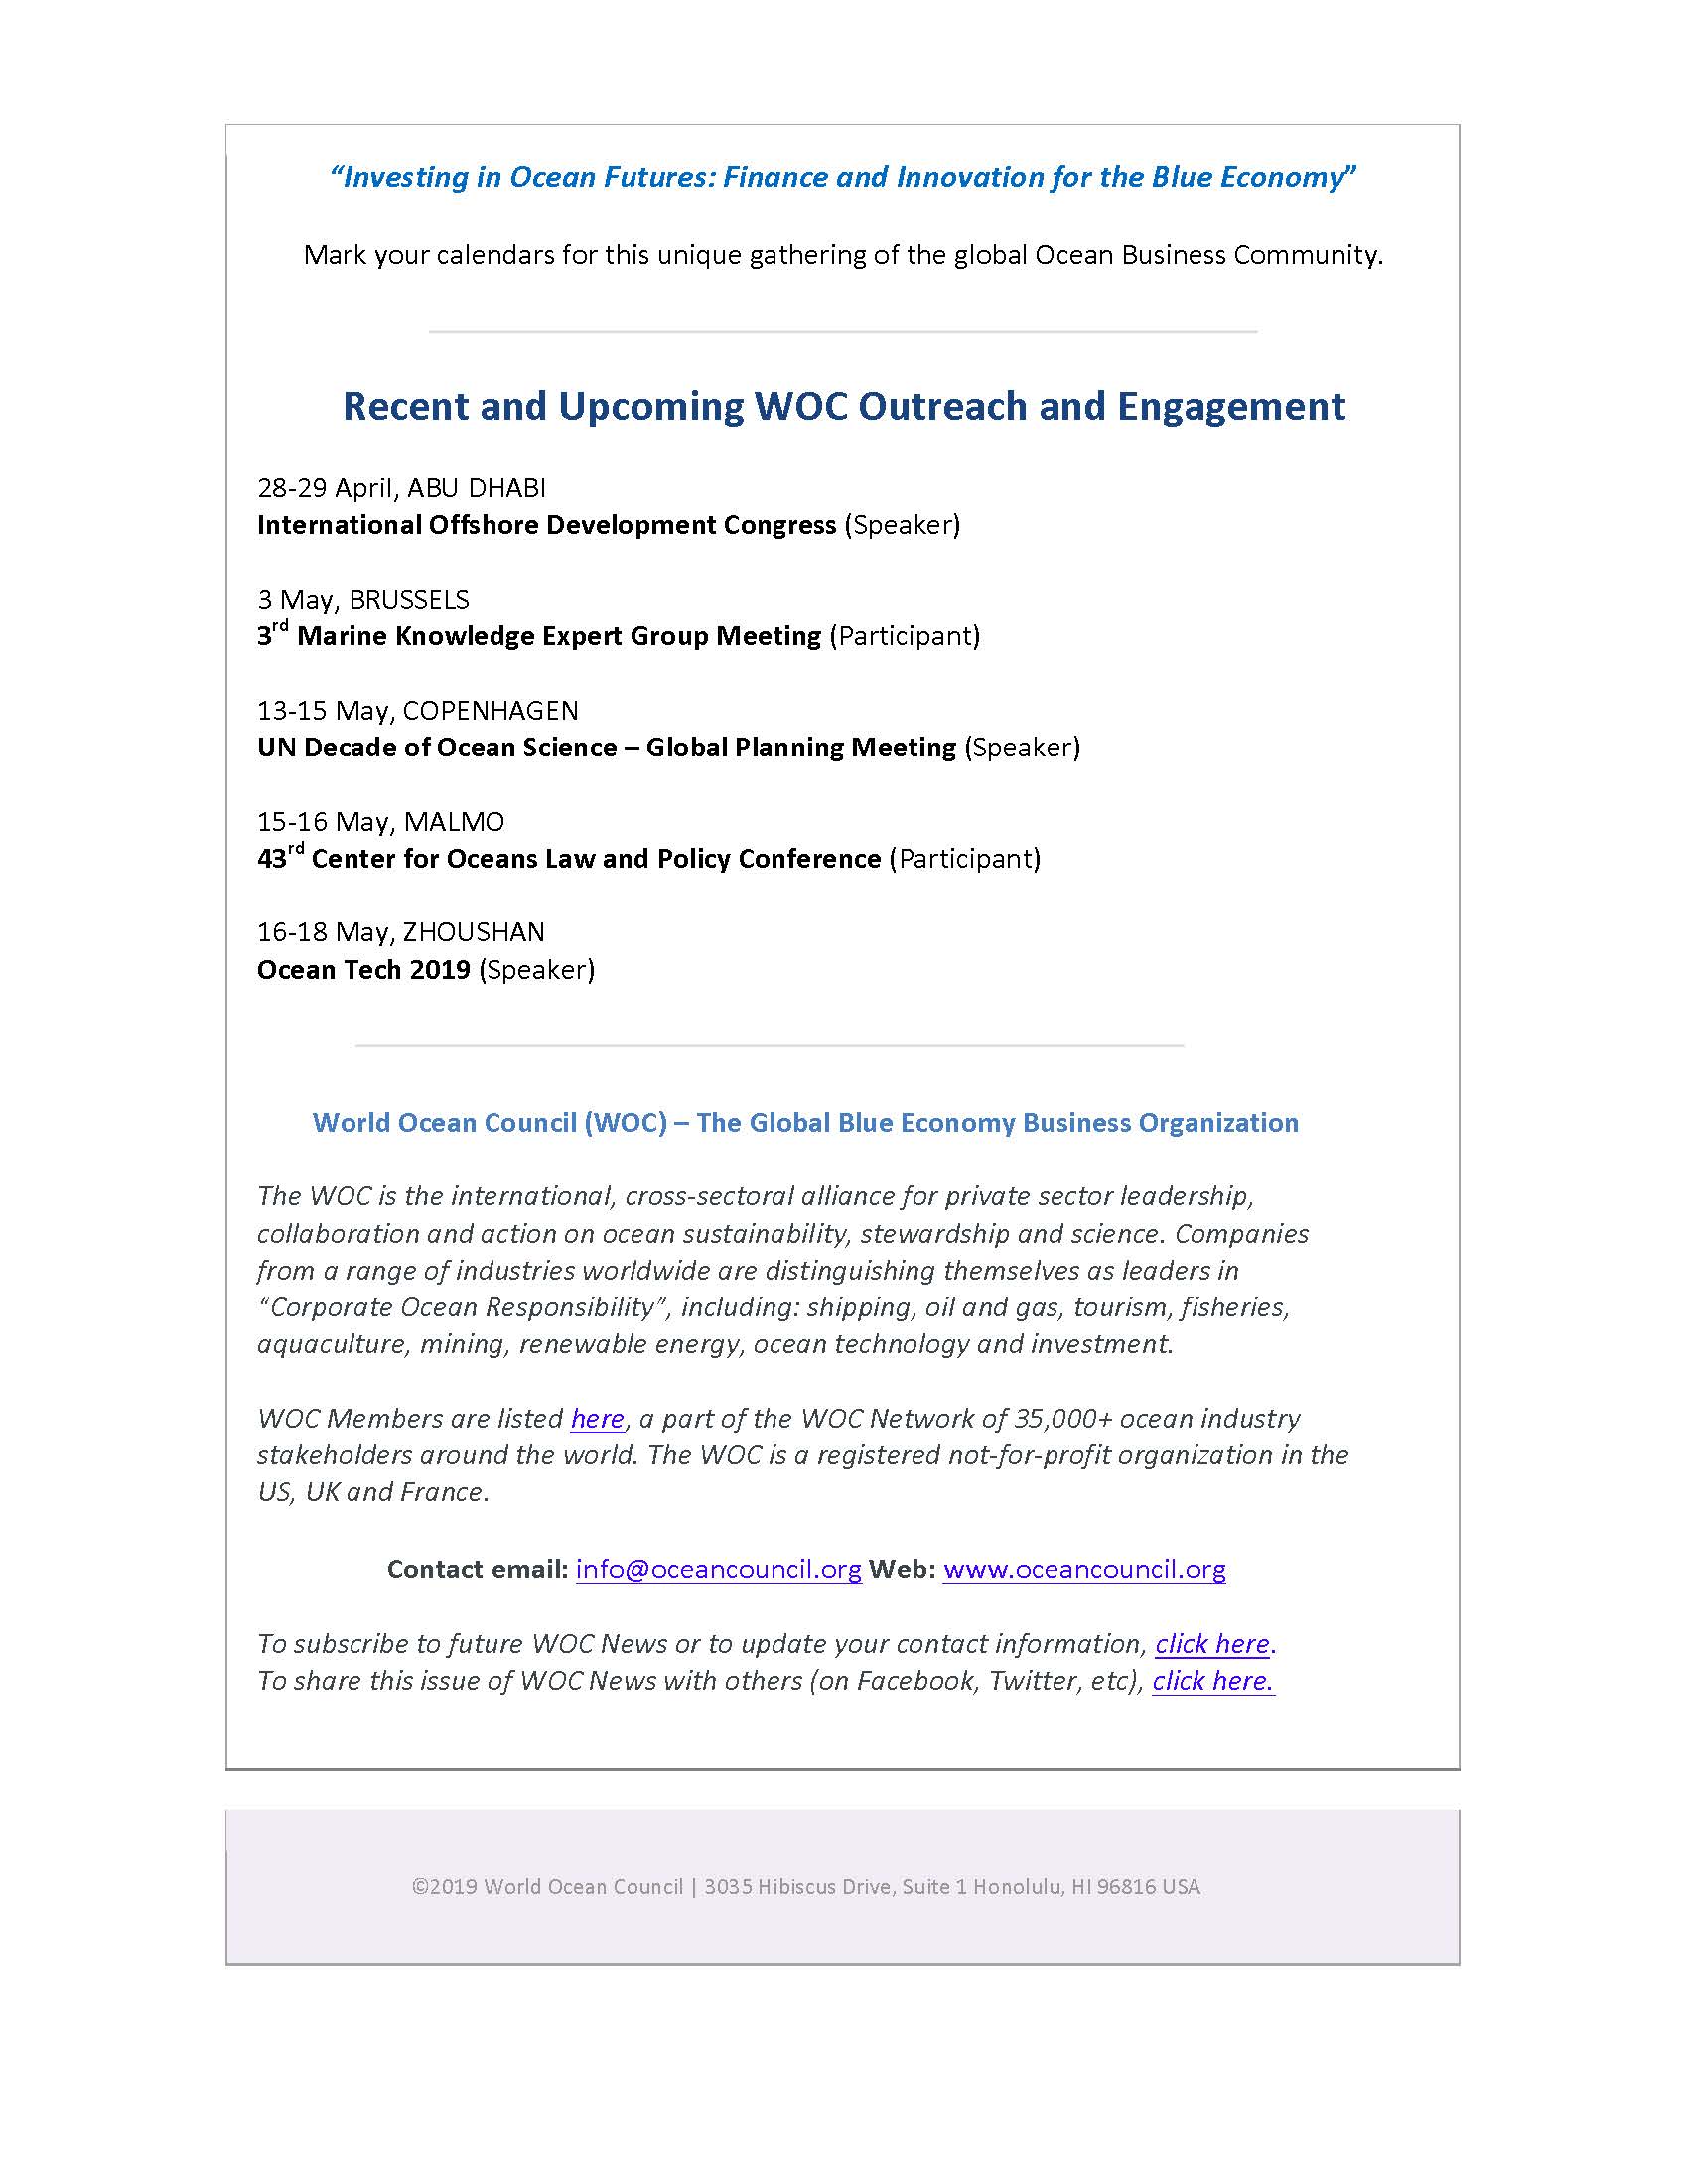 Deep Sea Mining Summit (29-30 April, London) and WOC Collaborate - 24 April 2019